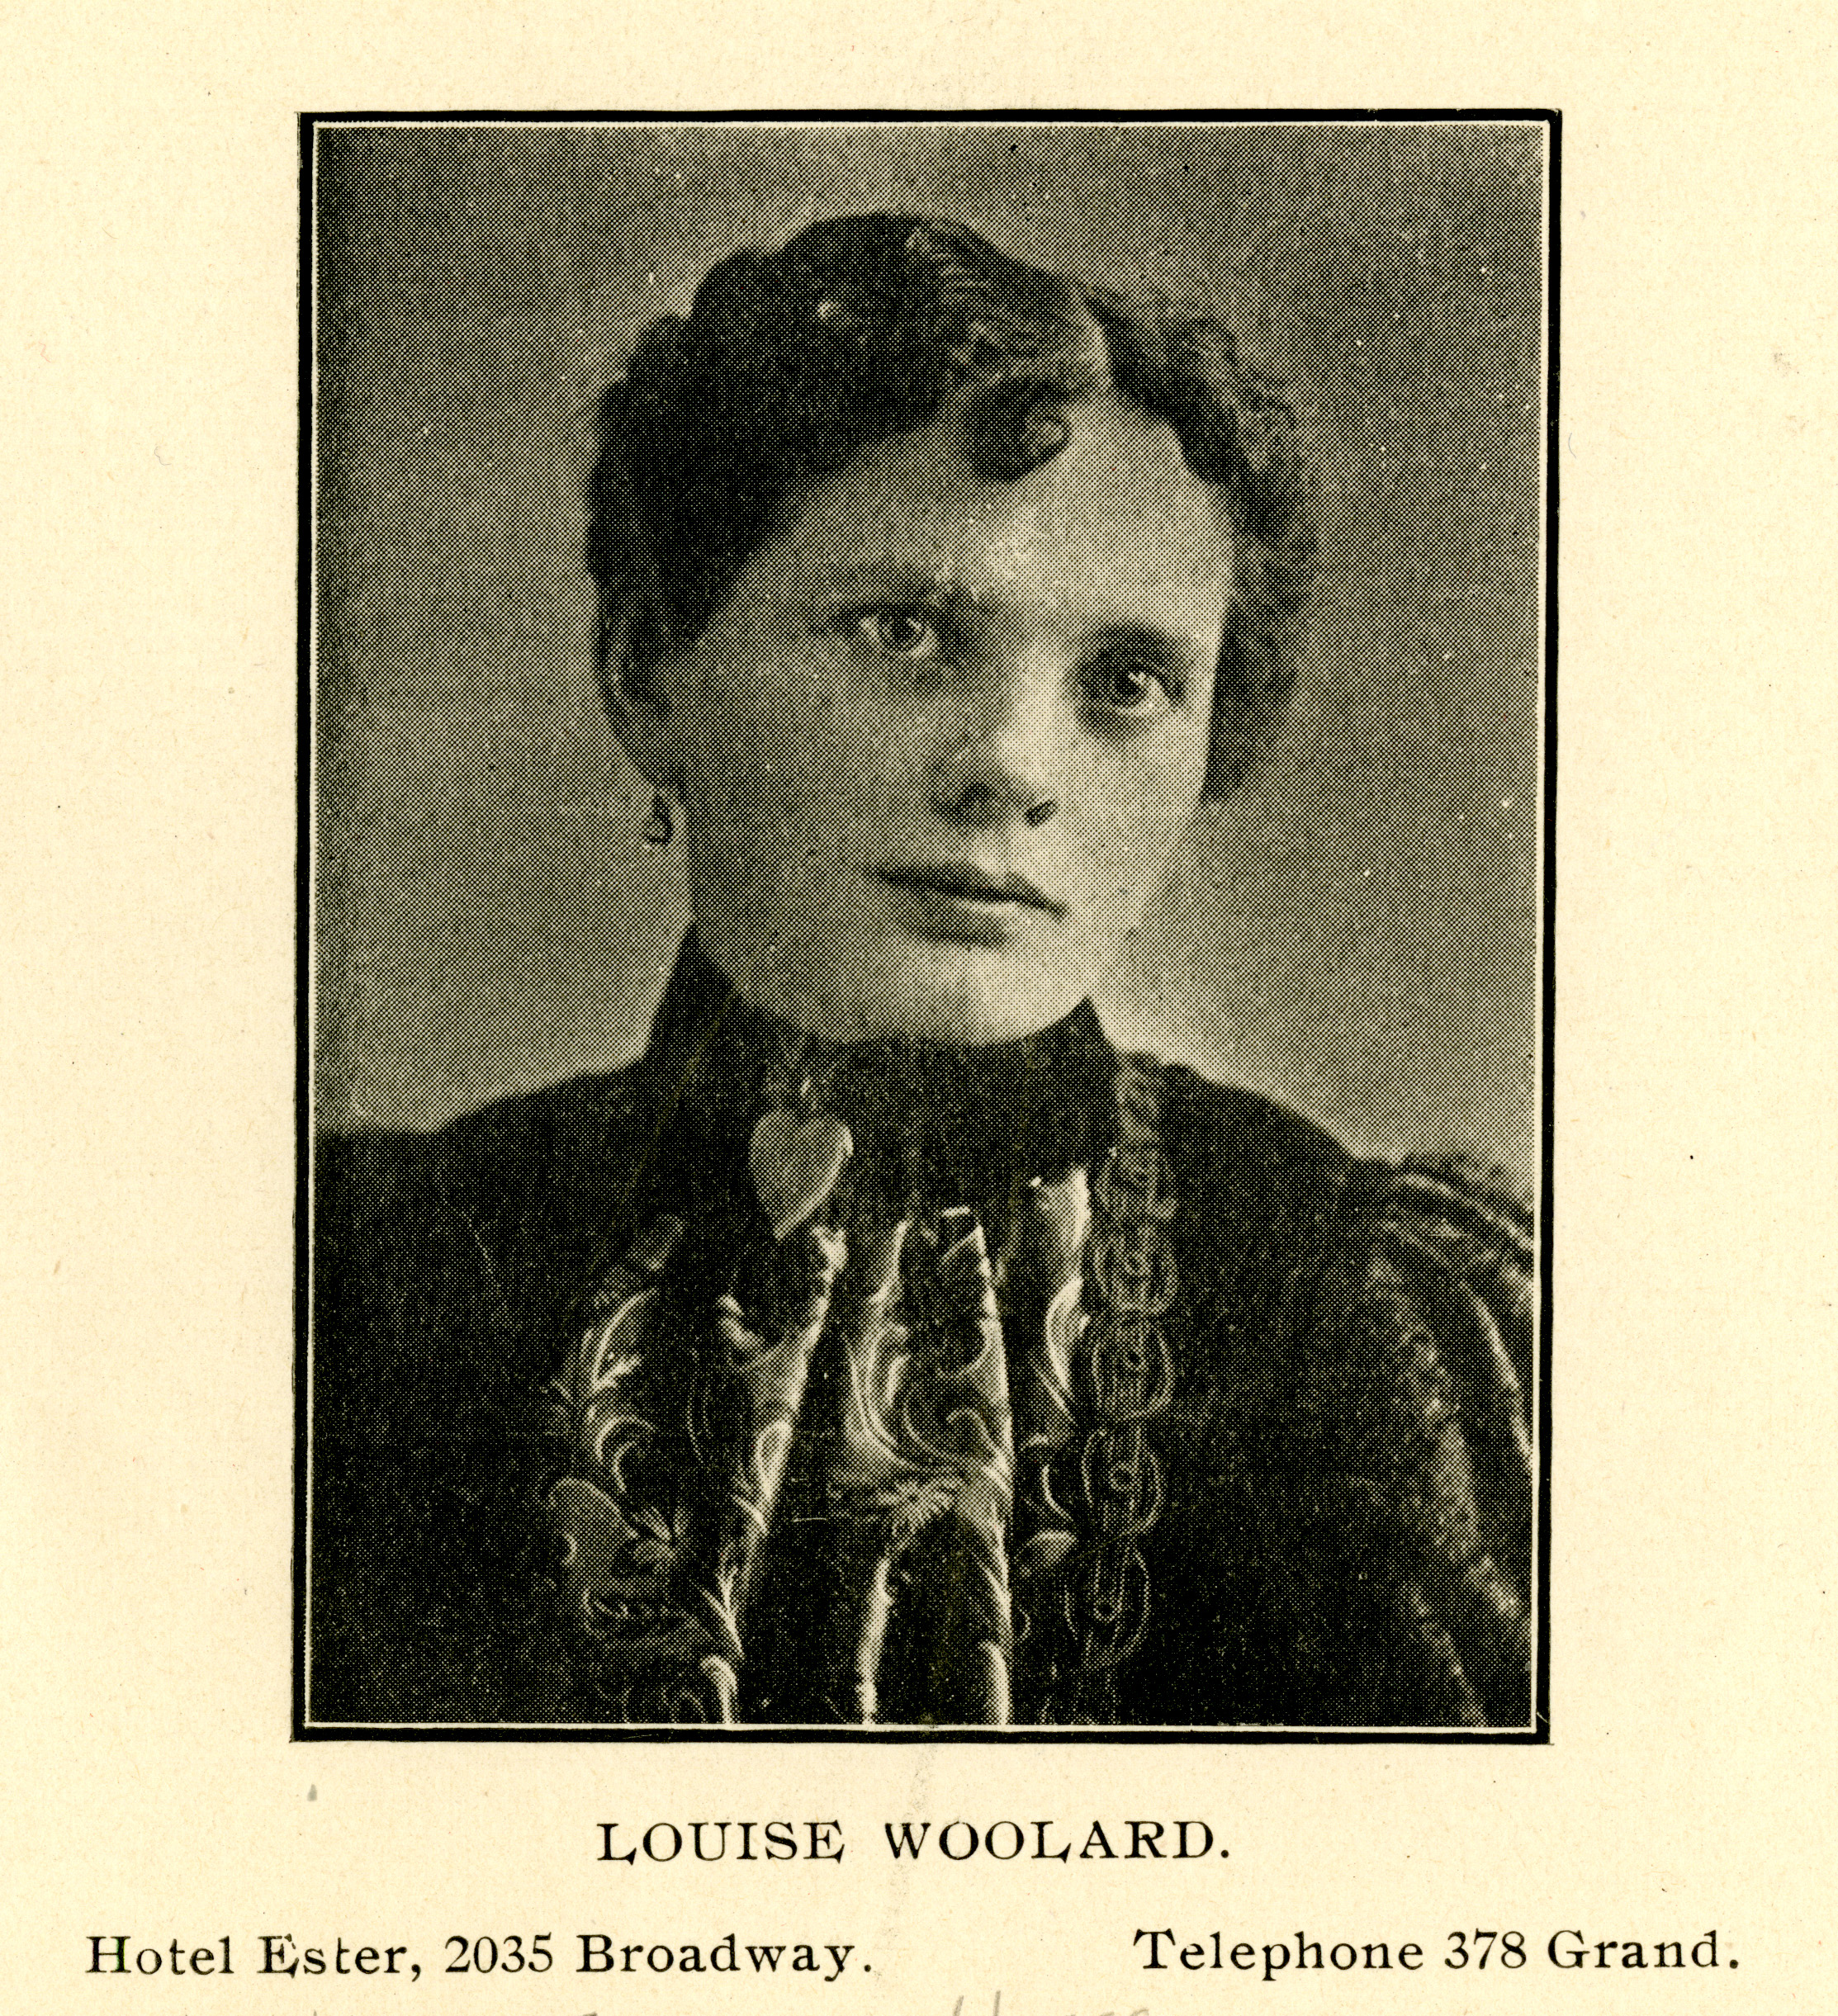 City Directory Portrait of Louise Woolard